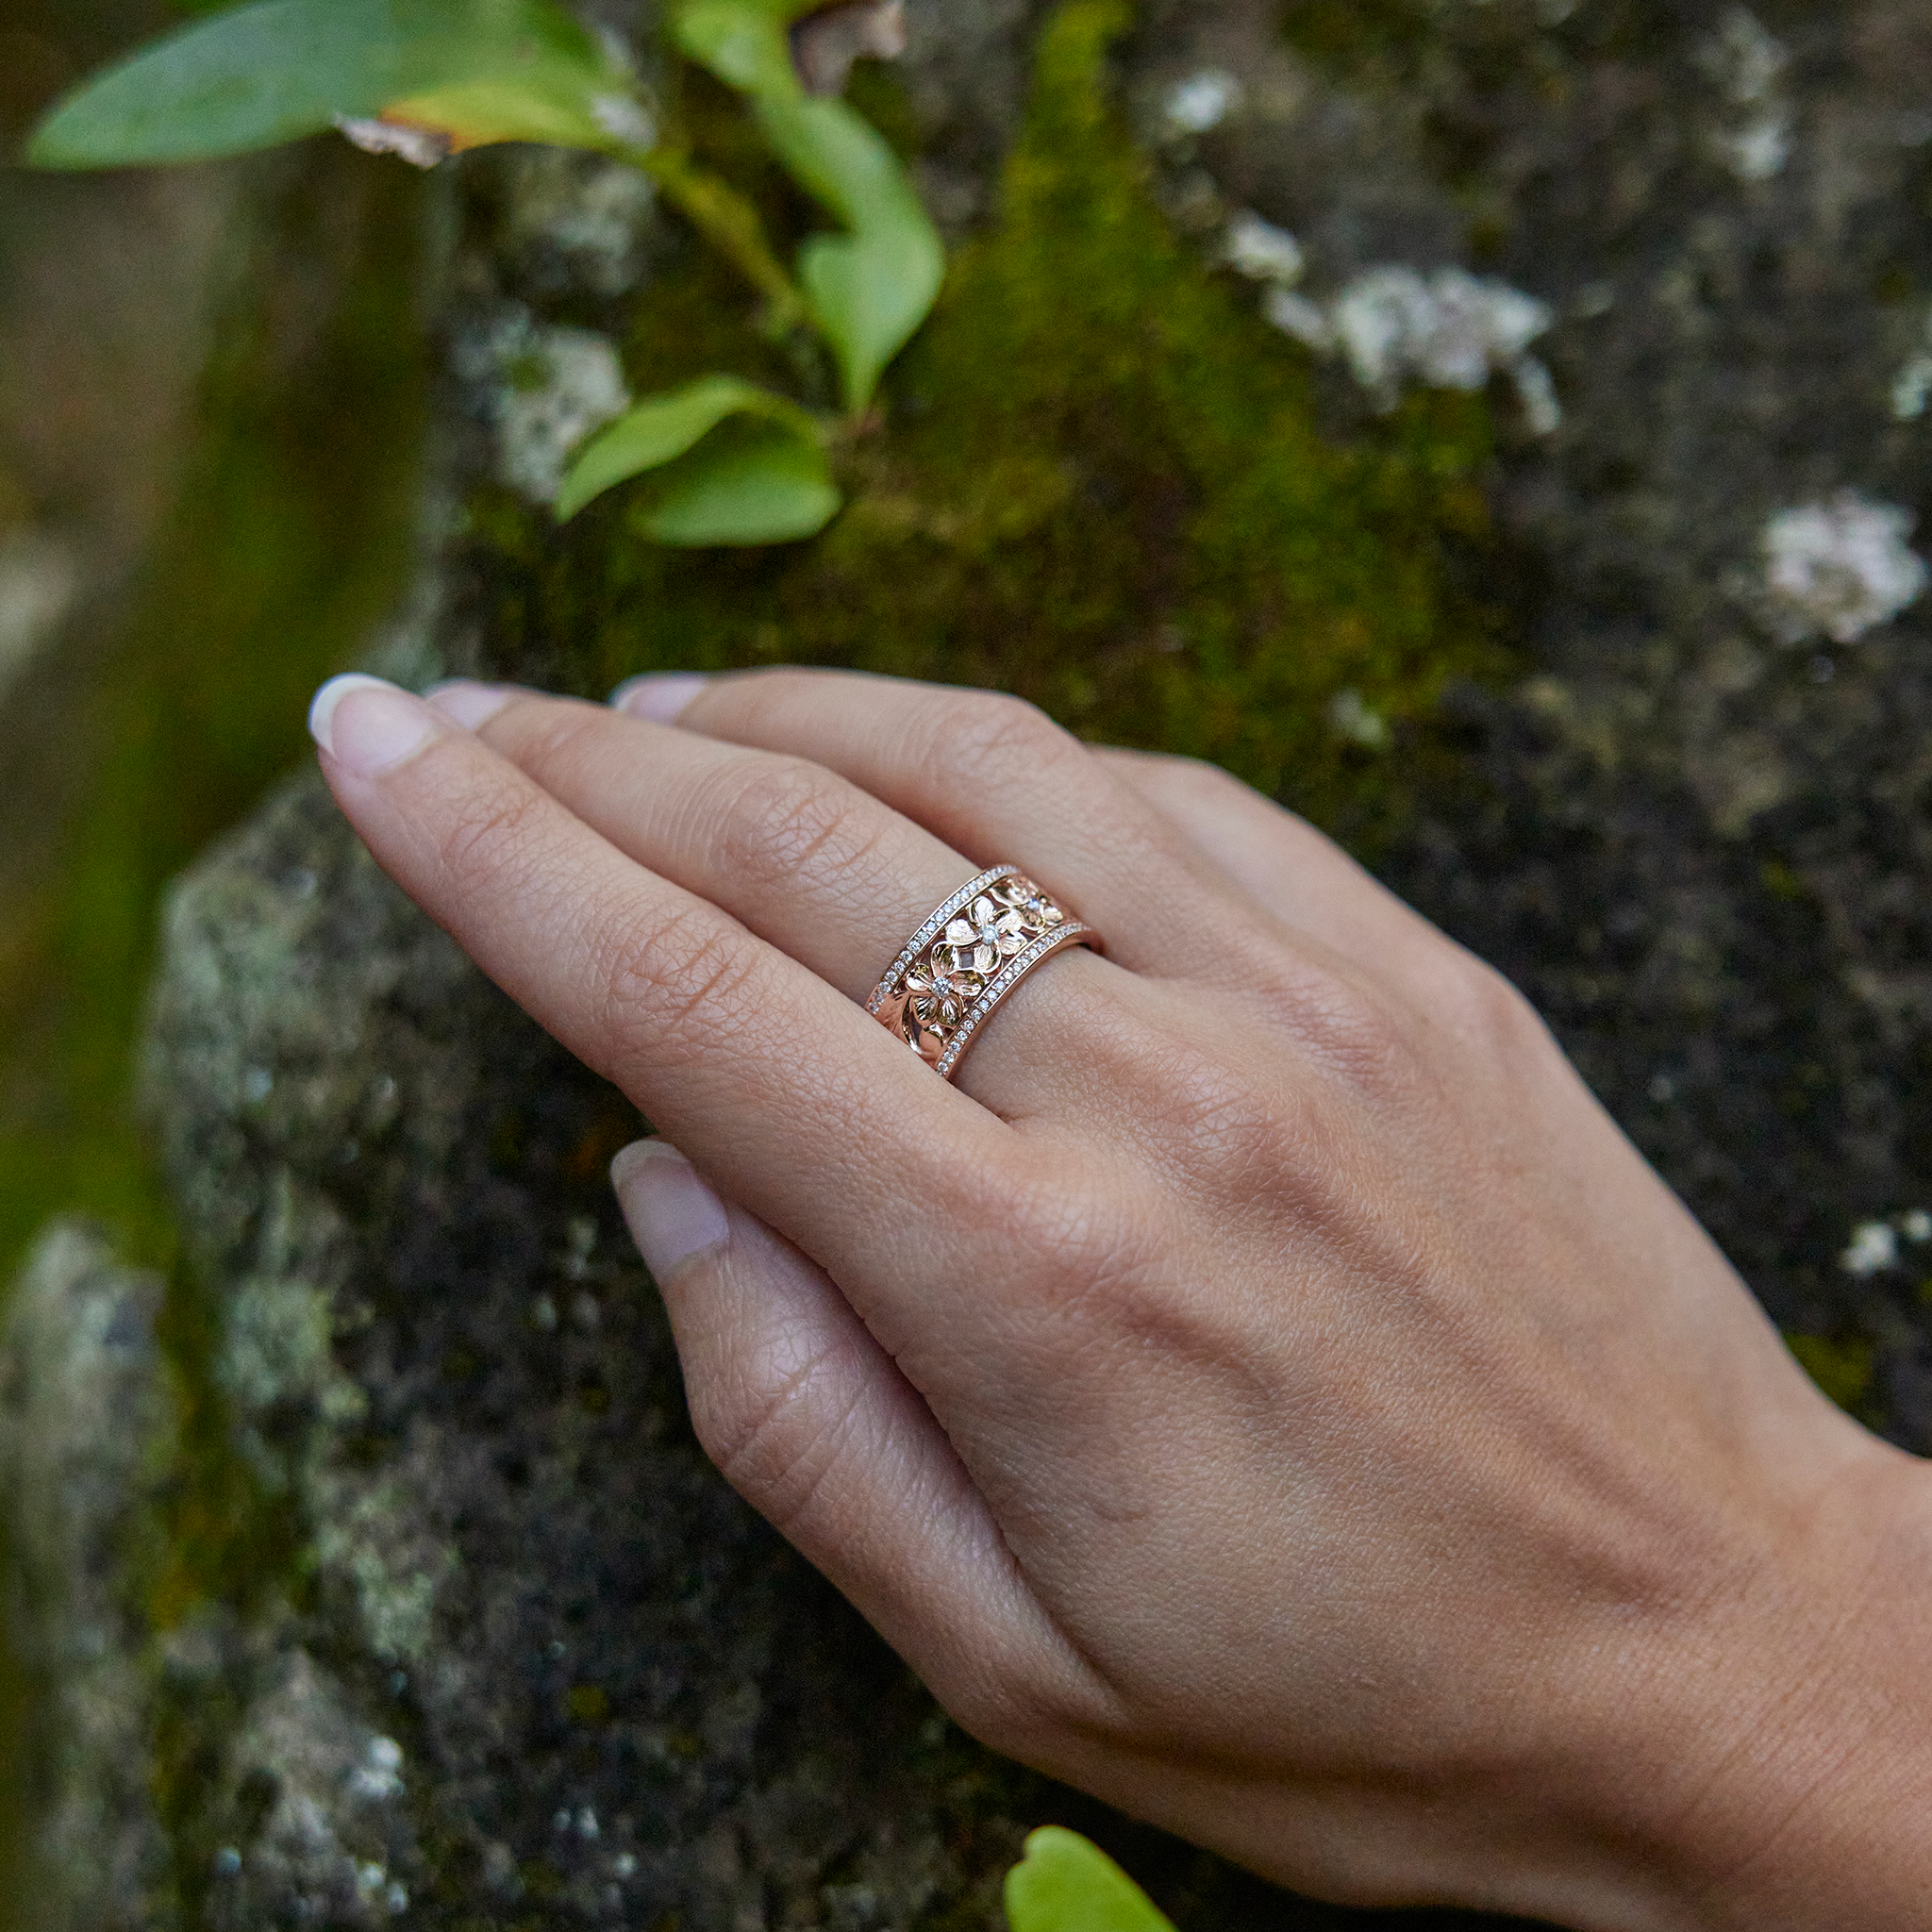 Hawaiian Heirloom Plumeria Ring in Rose Gold with Diamonds - 10mm